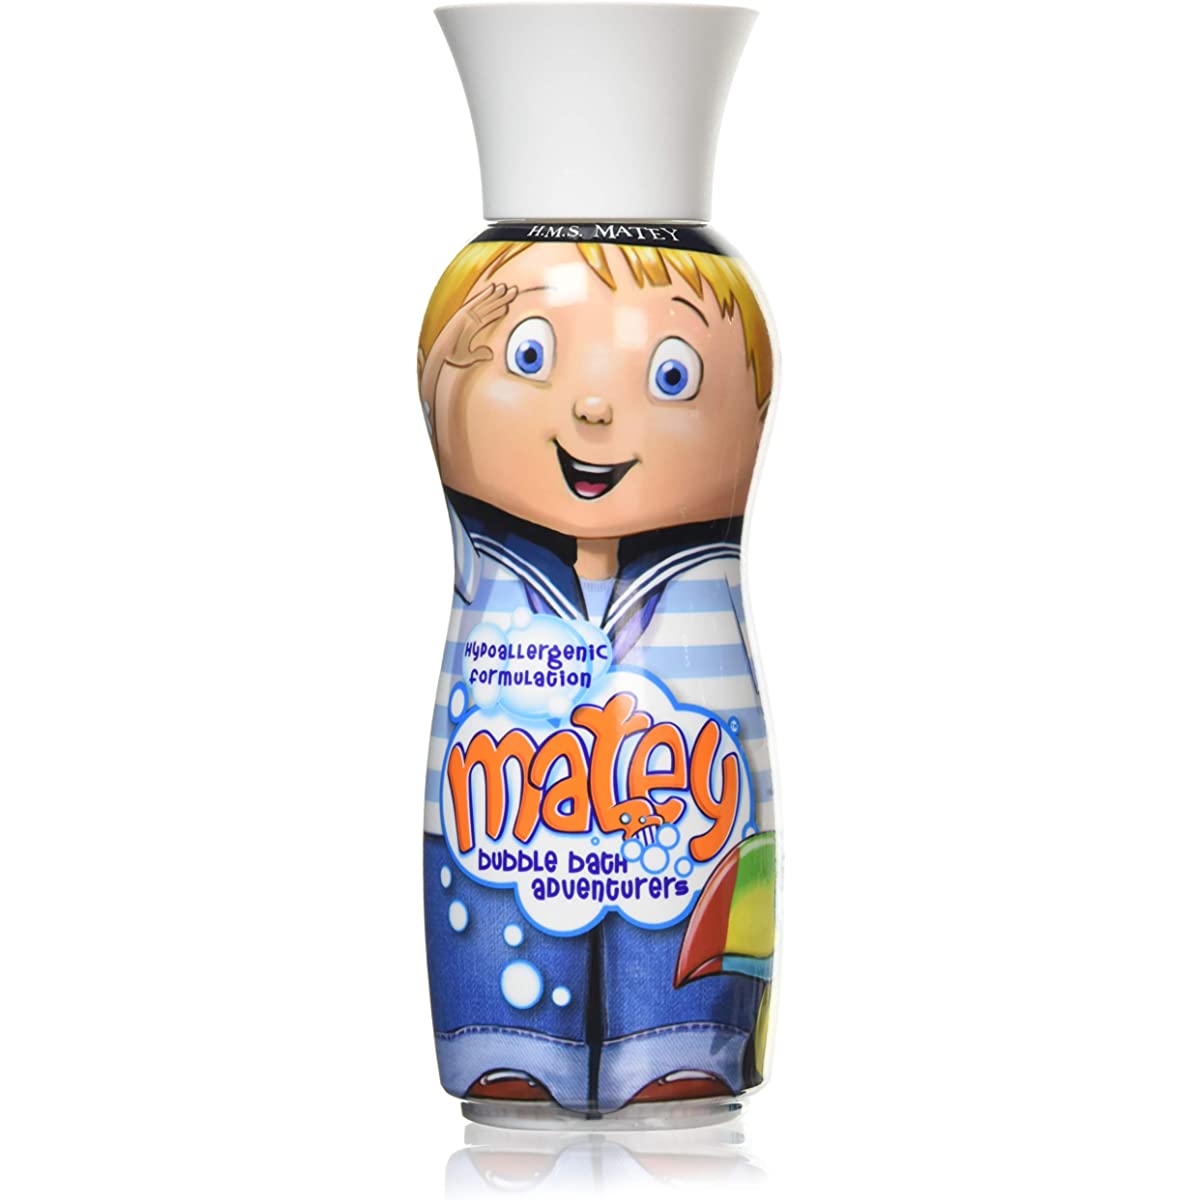 Max by Matey Bubble Bath Adventures (500 ml) Matey